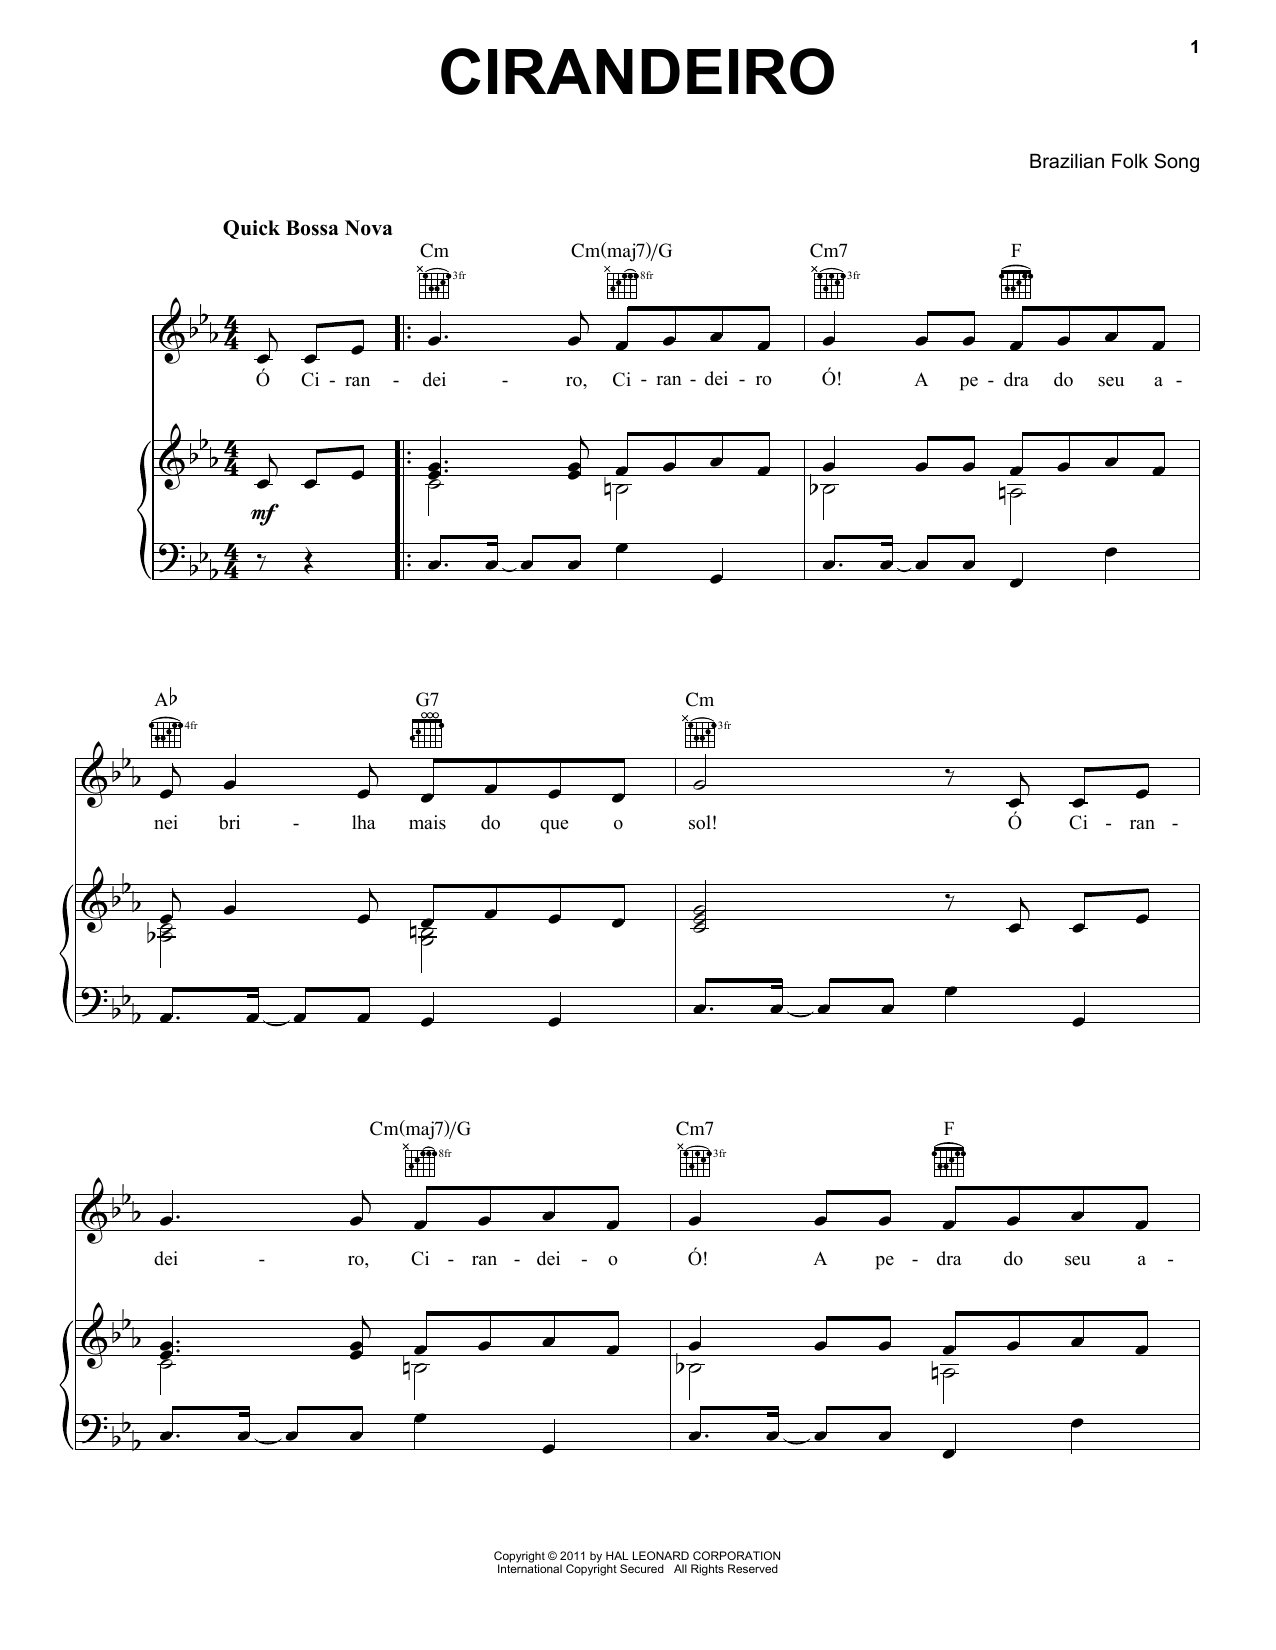 Brazilian Folk Song Cirandeiro Sheet Music Notes & Chords for Piano, Vocal & Guitar (Right-Hand Melody) - Download or Print PDF